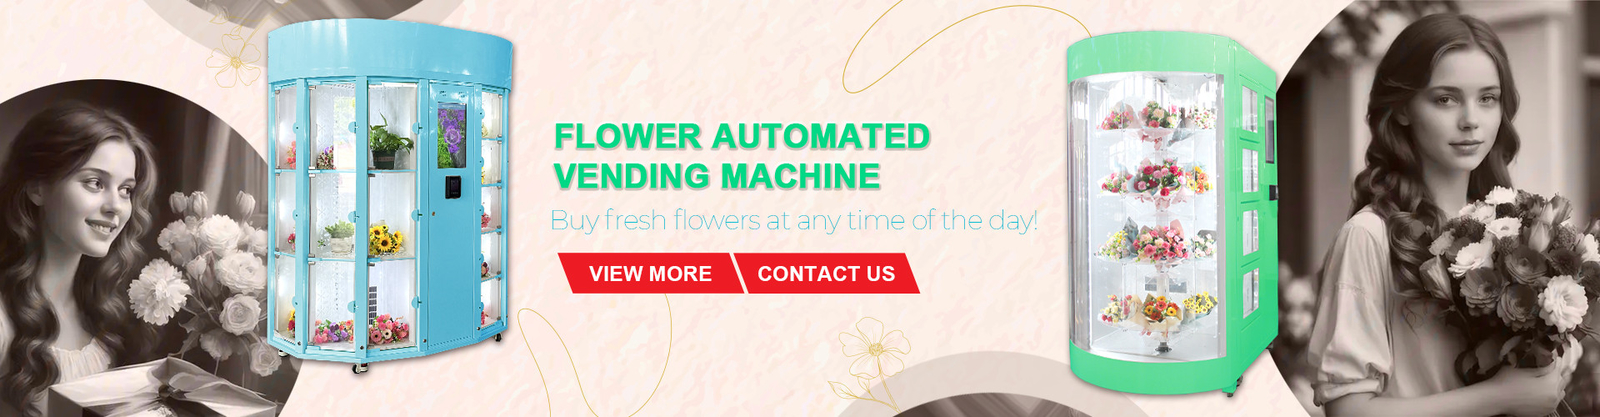 Blumen-Automat